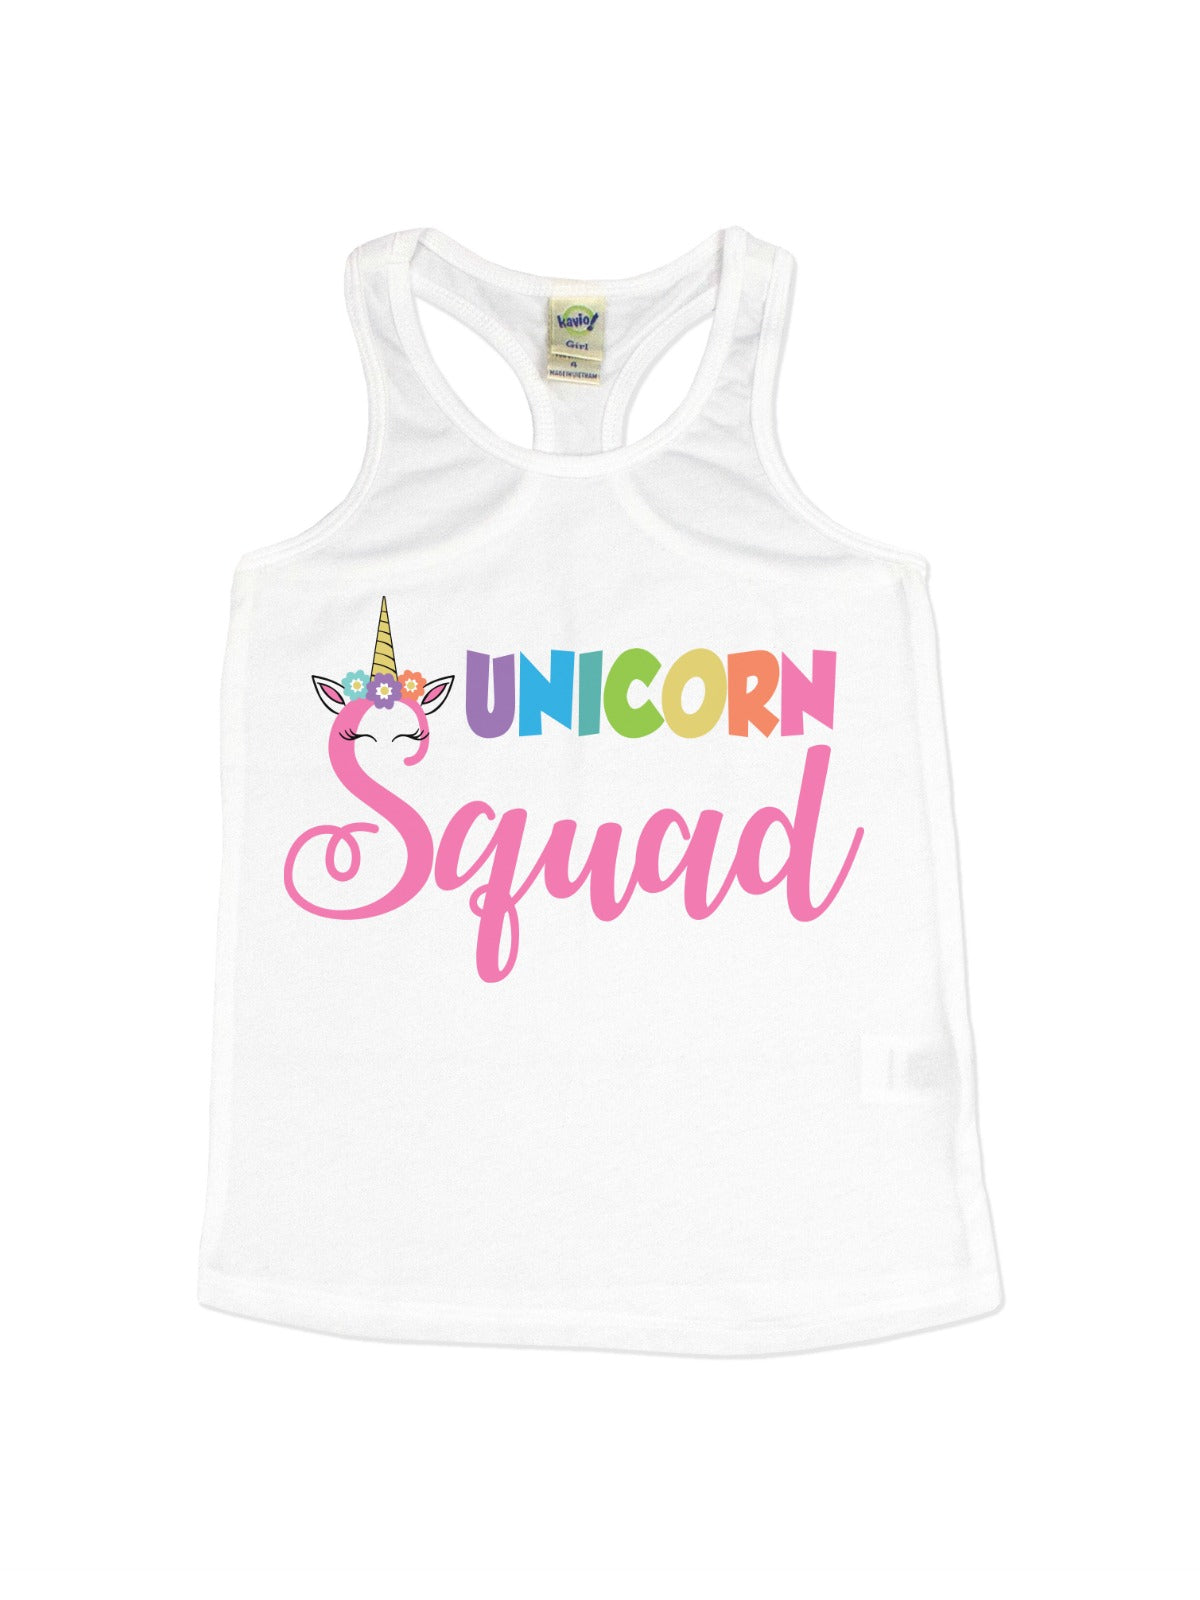 unicorn squad girls shirt